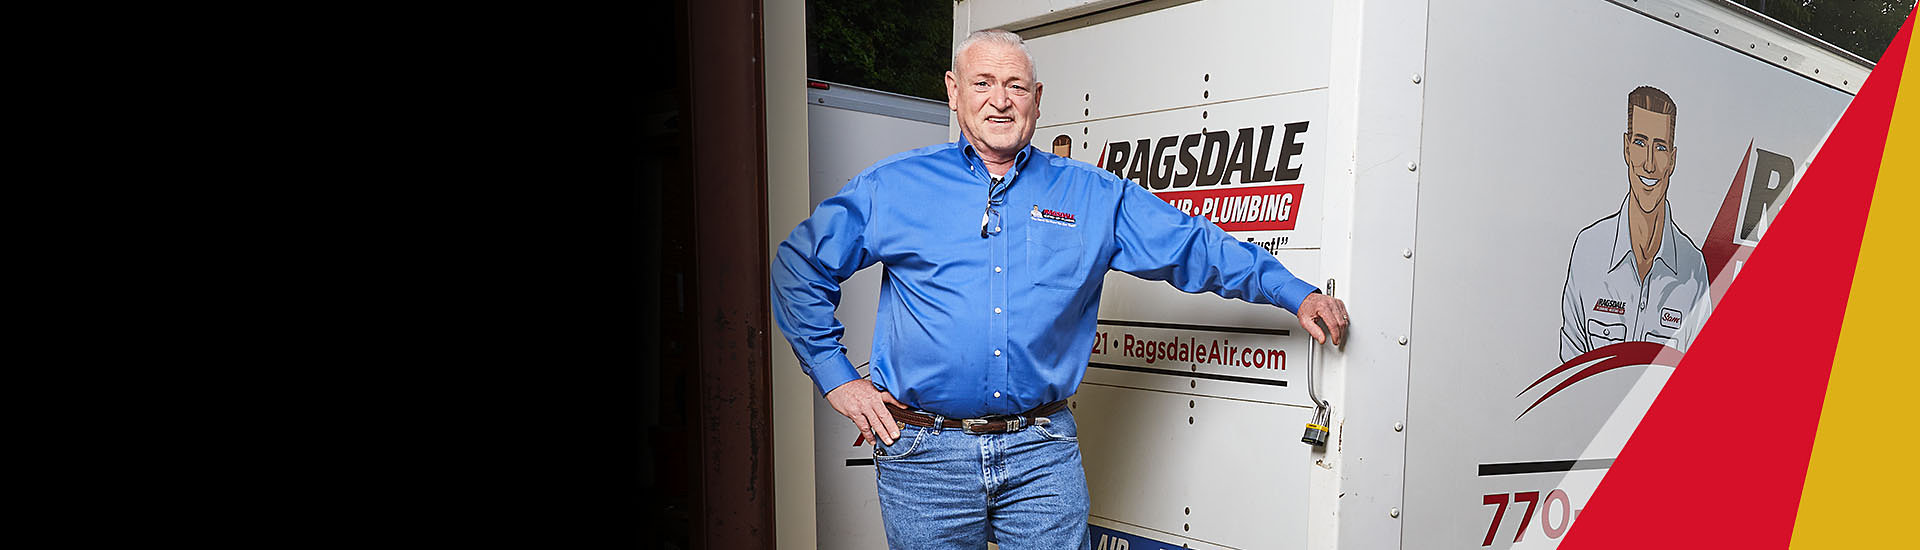 Ragsdale employee standing behind truck smiling